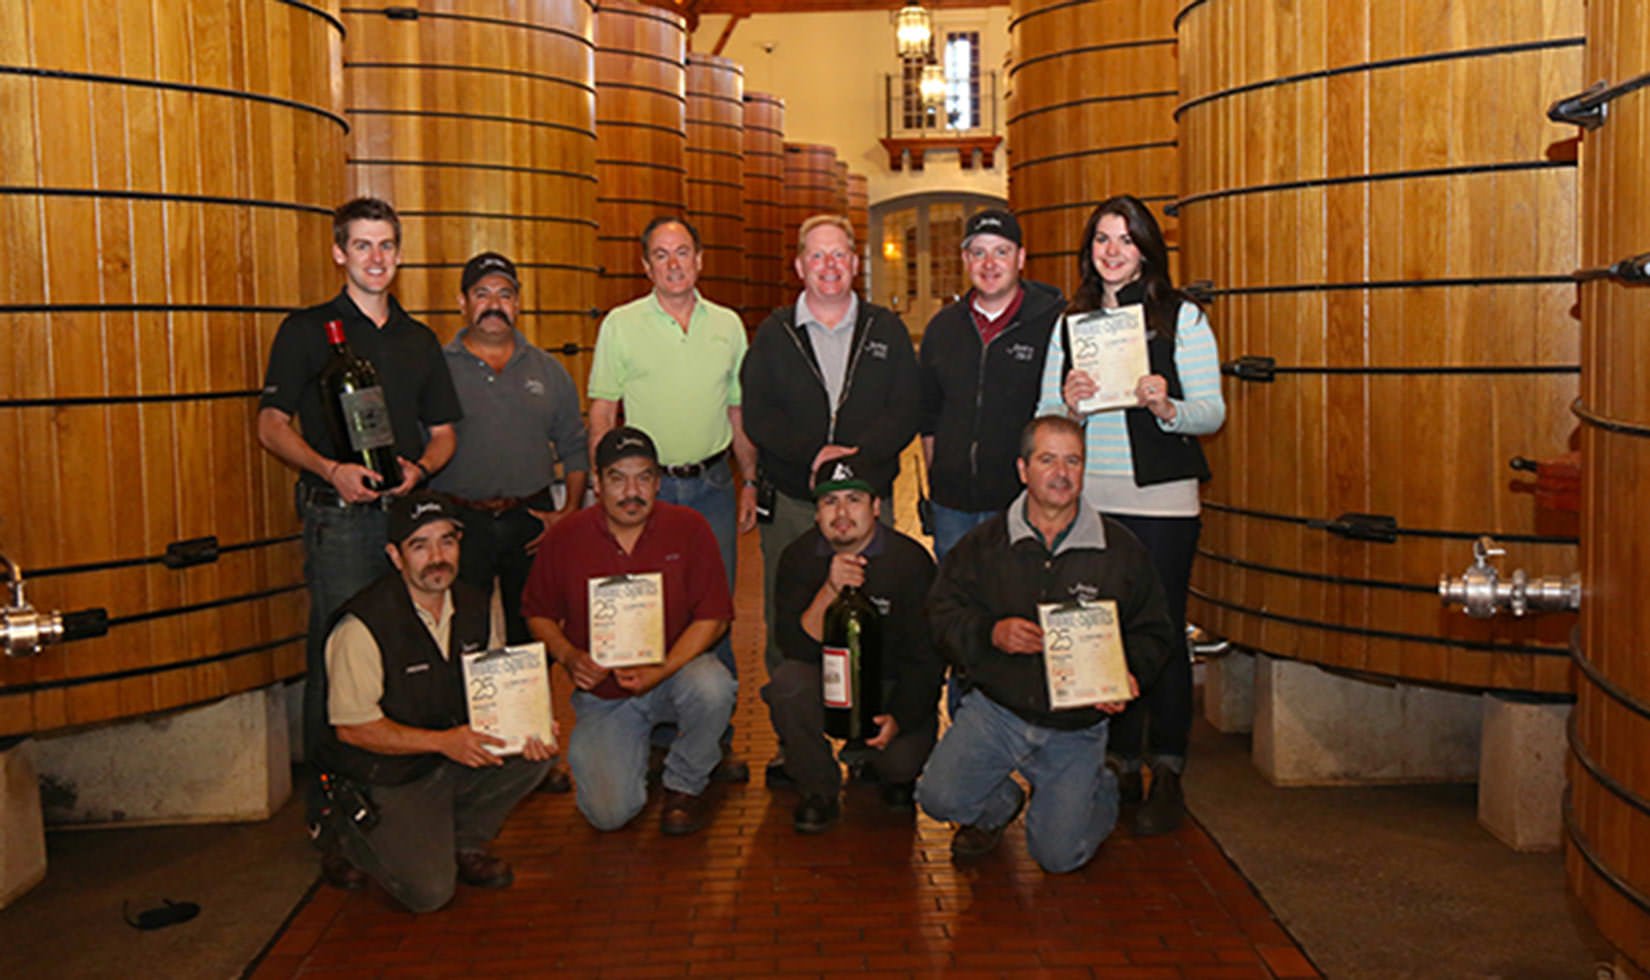 Jordan Winery 2014 winemaking crew posing in the large oak tank room at Jordan Winery